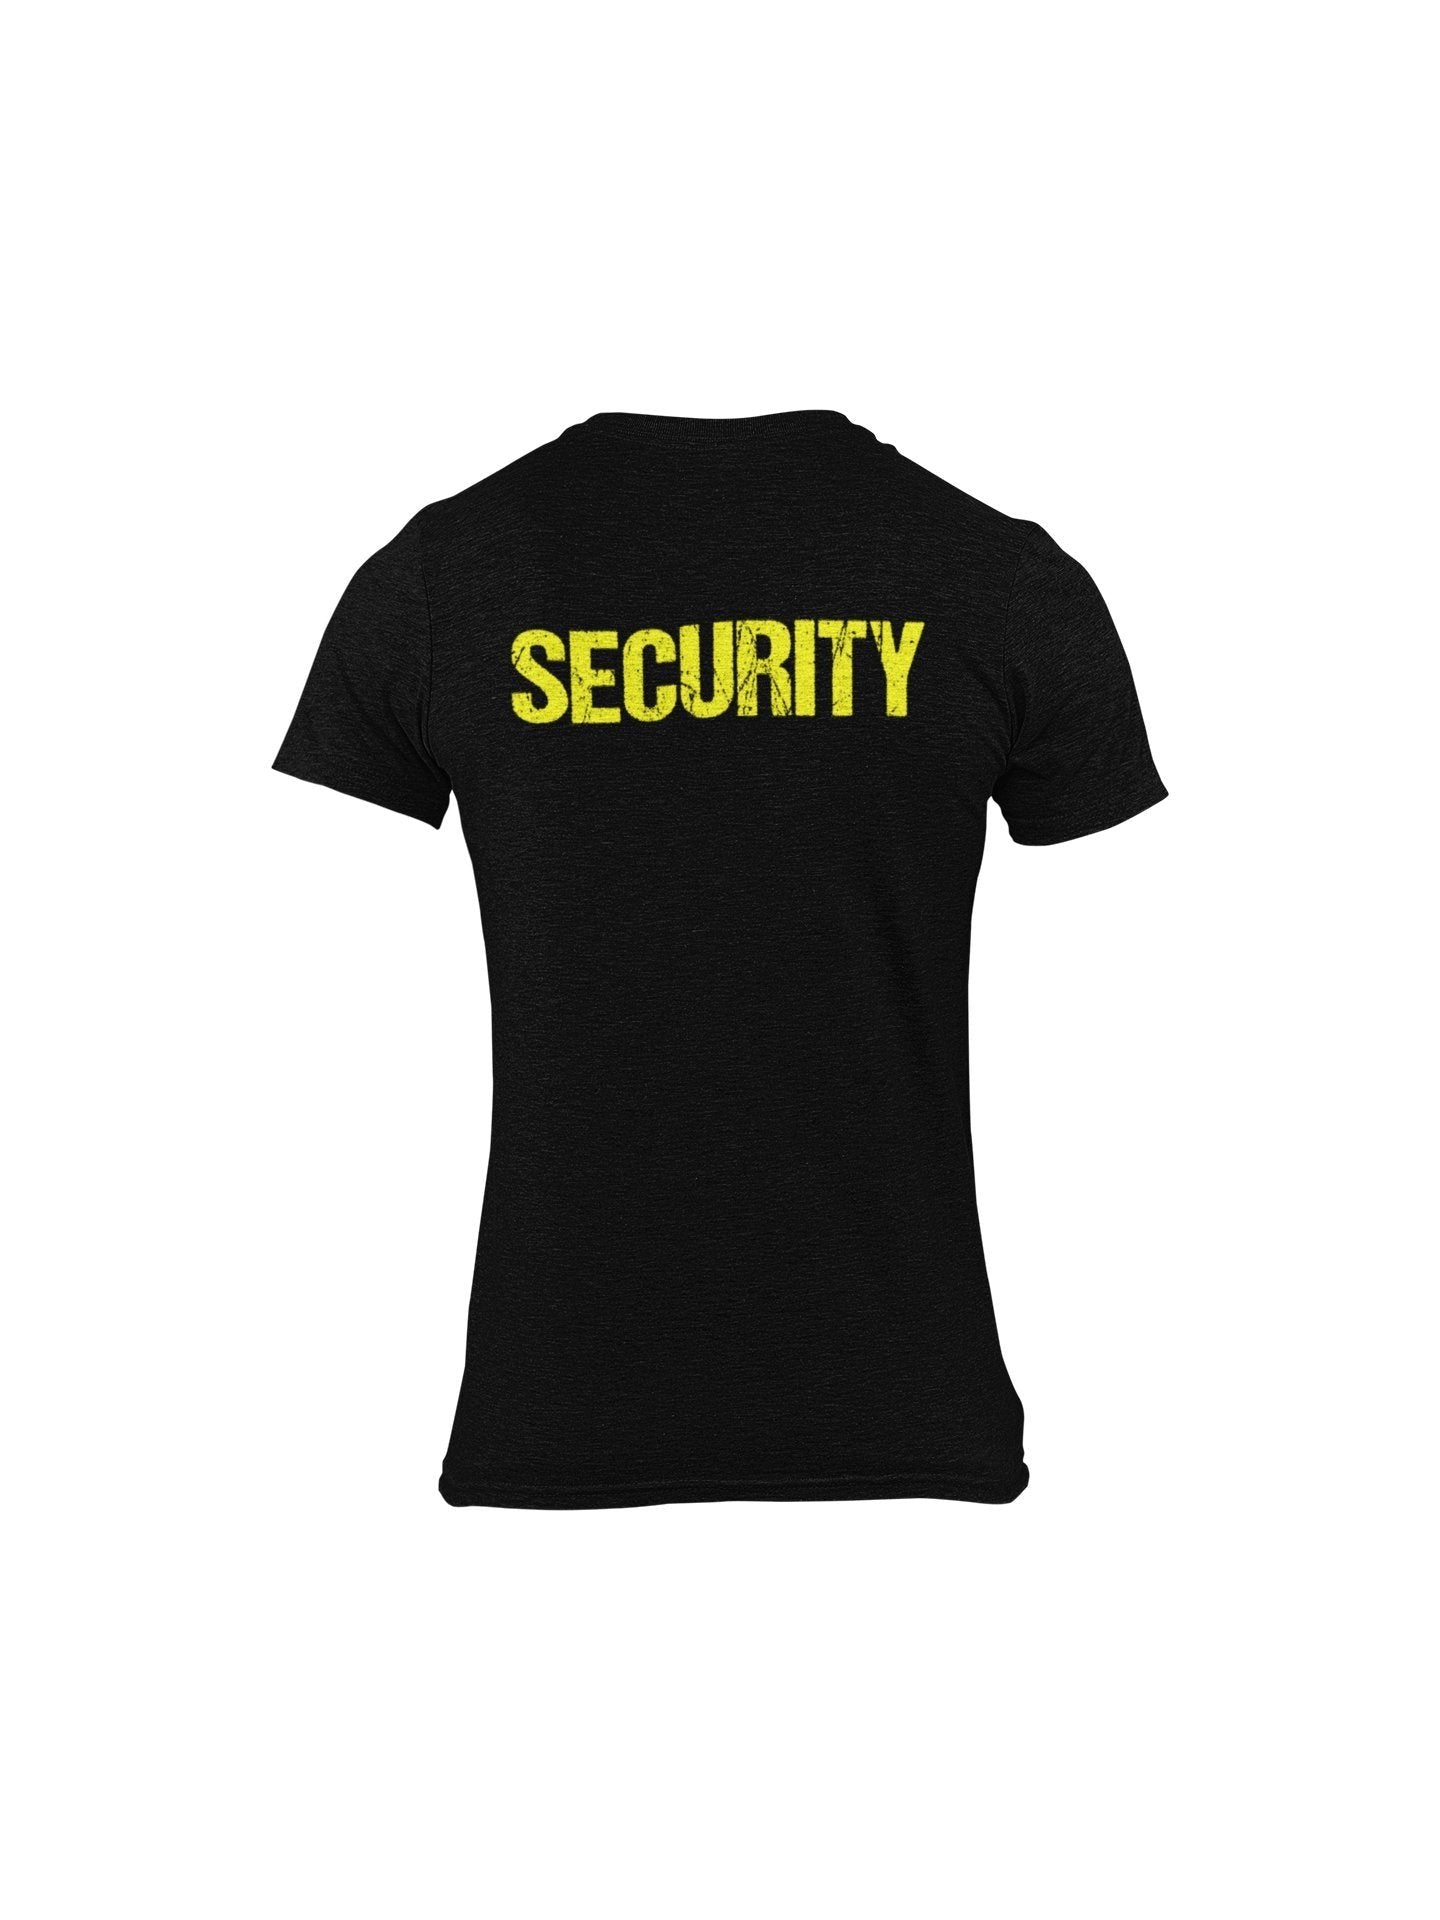 Men's Security T-Shirt (Distressed Design, Black/Neon)